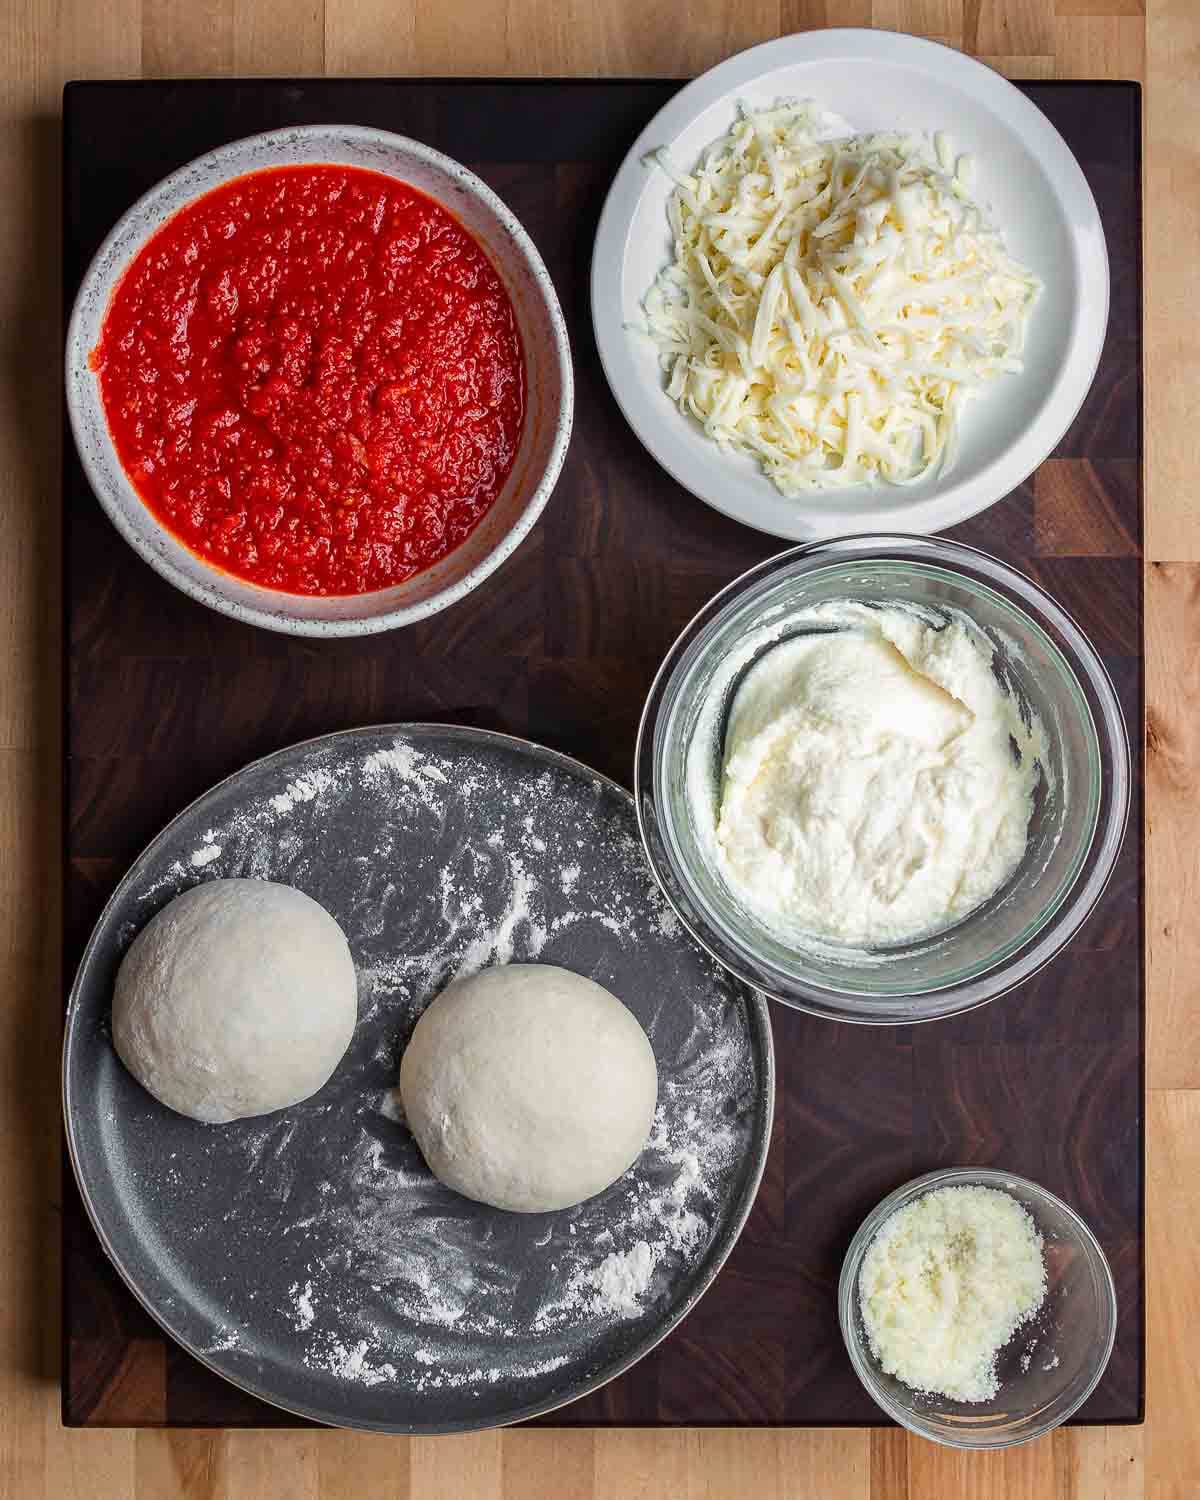 Ingredients shown: marinara, mozzarella, ricotta, 2 dough balls, and Pecorino Romano.